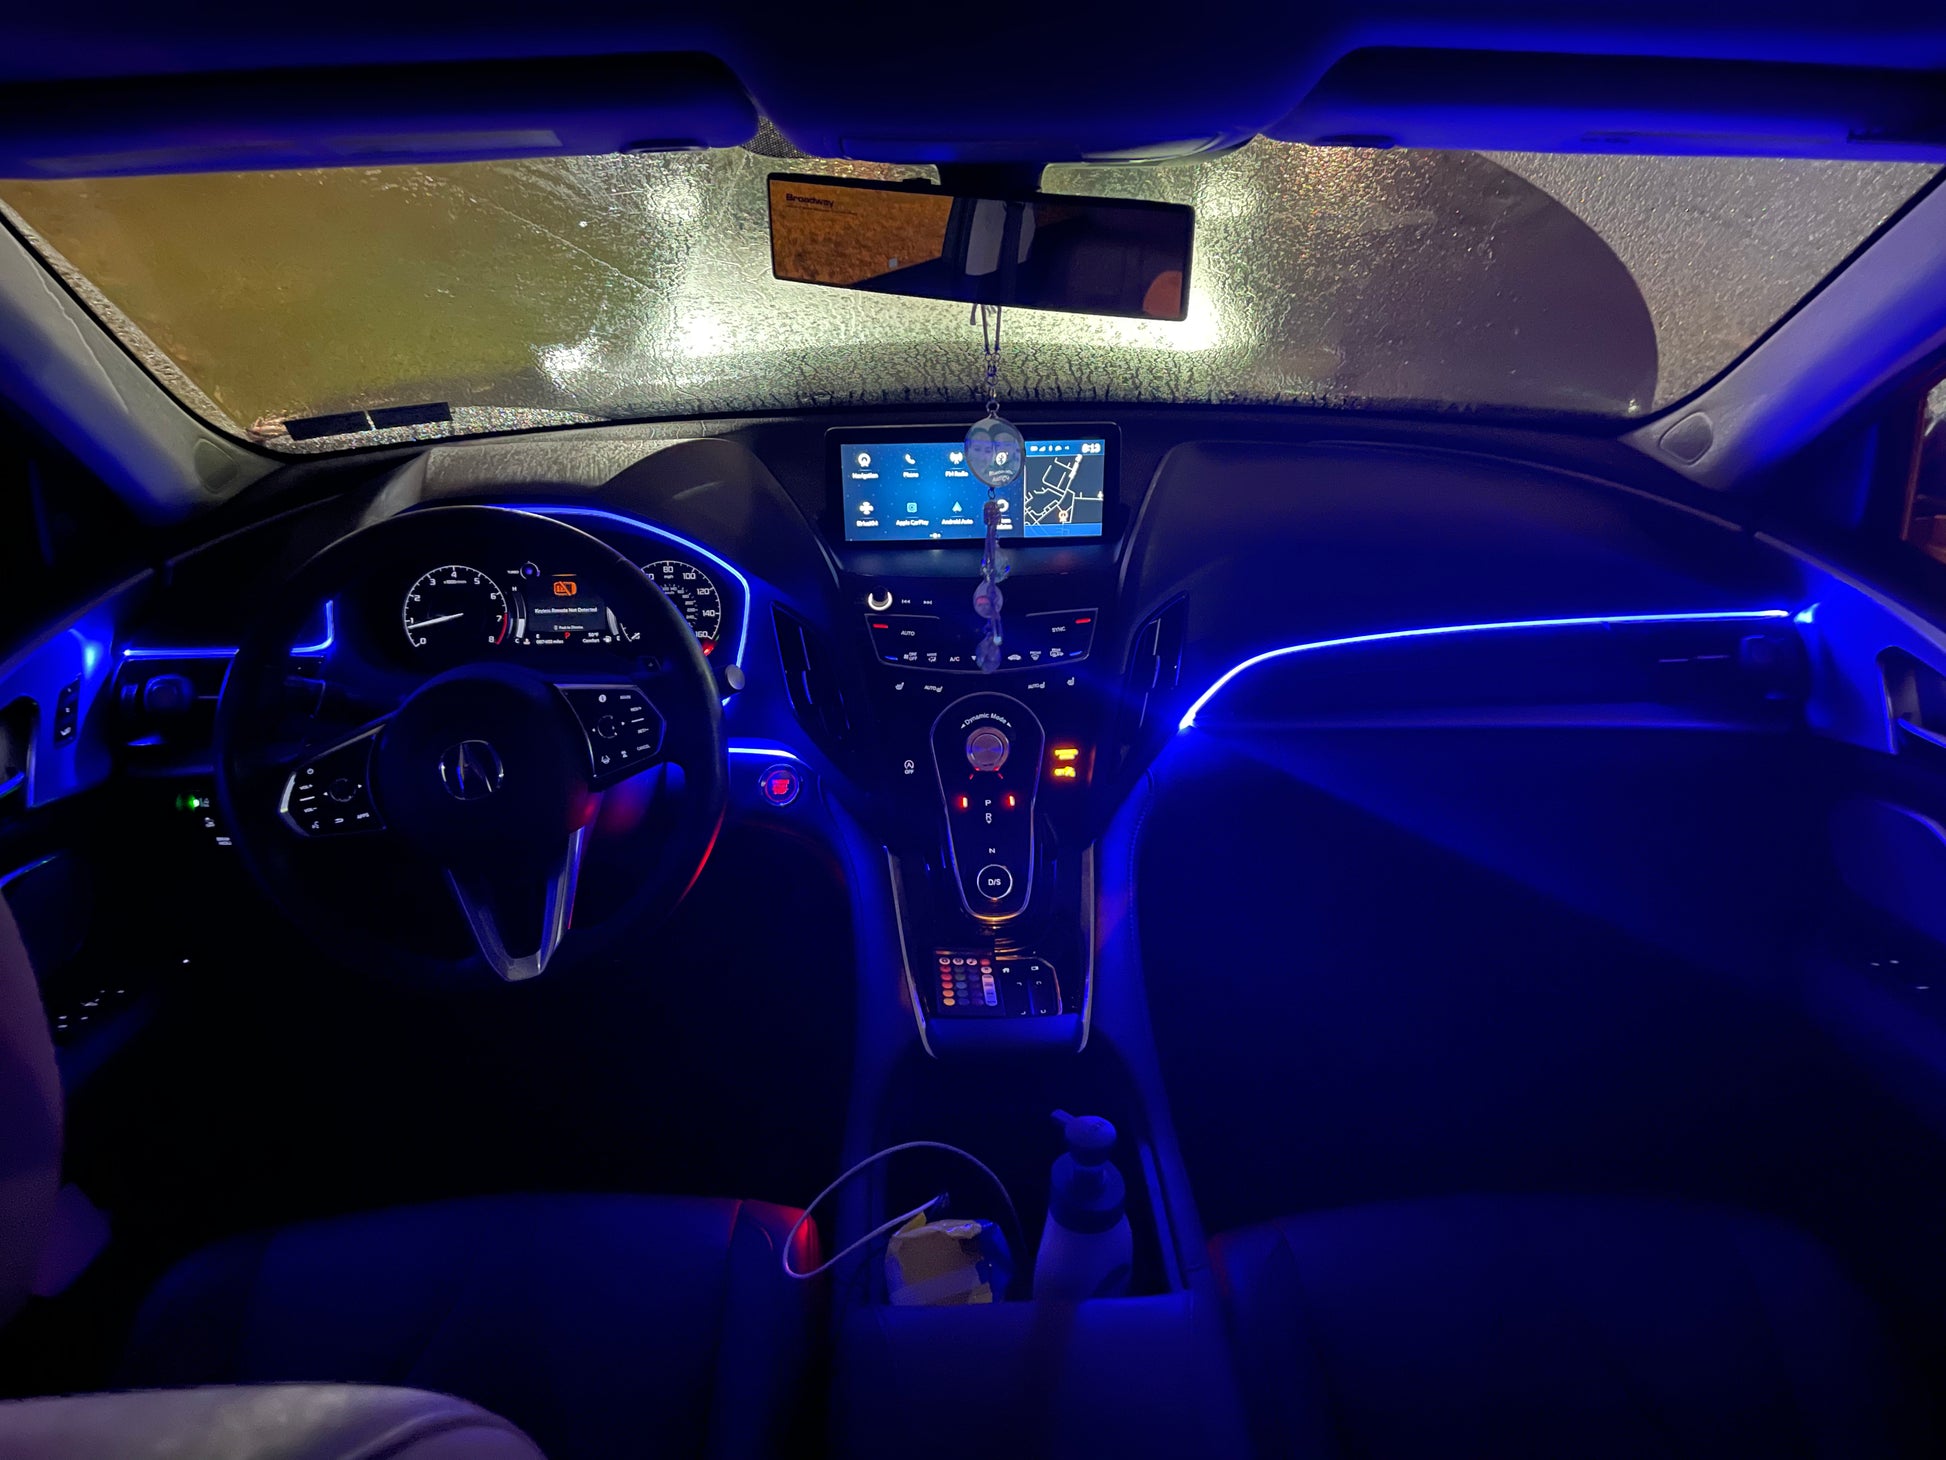 Lipctine 4 PCS USB LED Car Interior Atmosphere Lamp, Night Light Mini Led  Decoration Light, Ambient Lighting Kit, Charging for All Cars, Interior Led